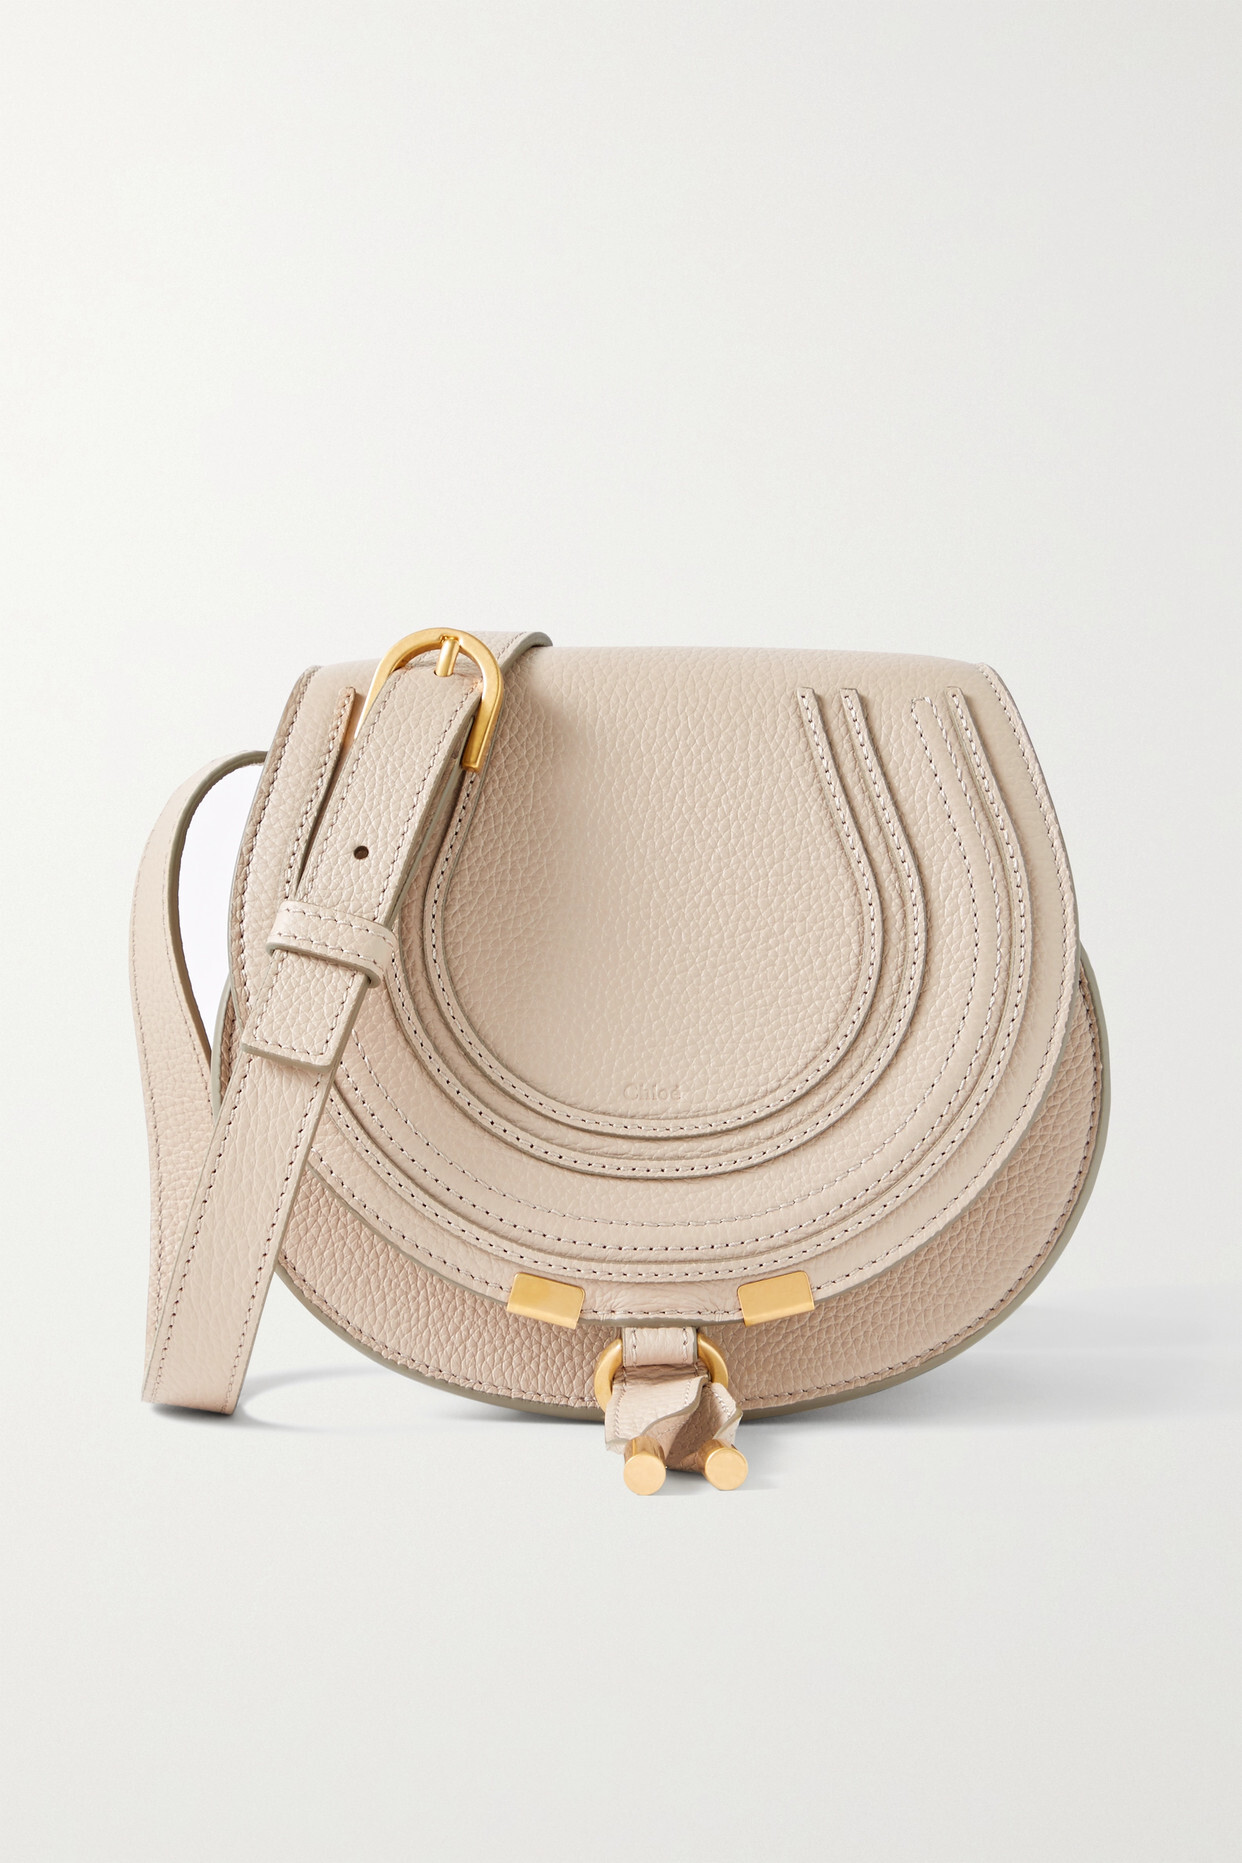 Chloé Chloé - Marcie Mini Textured-leather Shoulder Bag - Neutrals